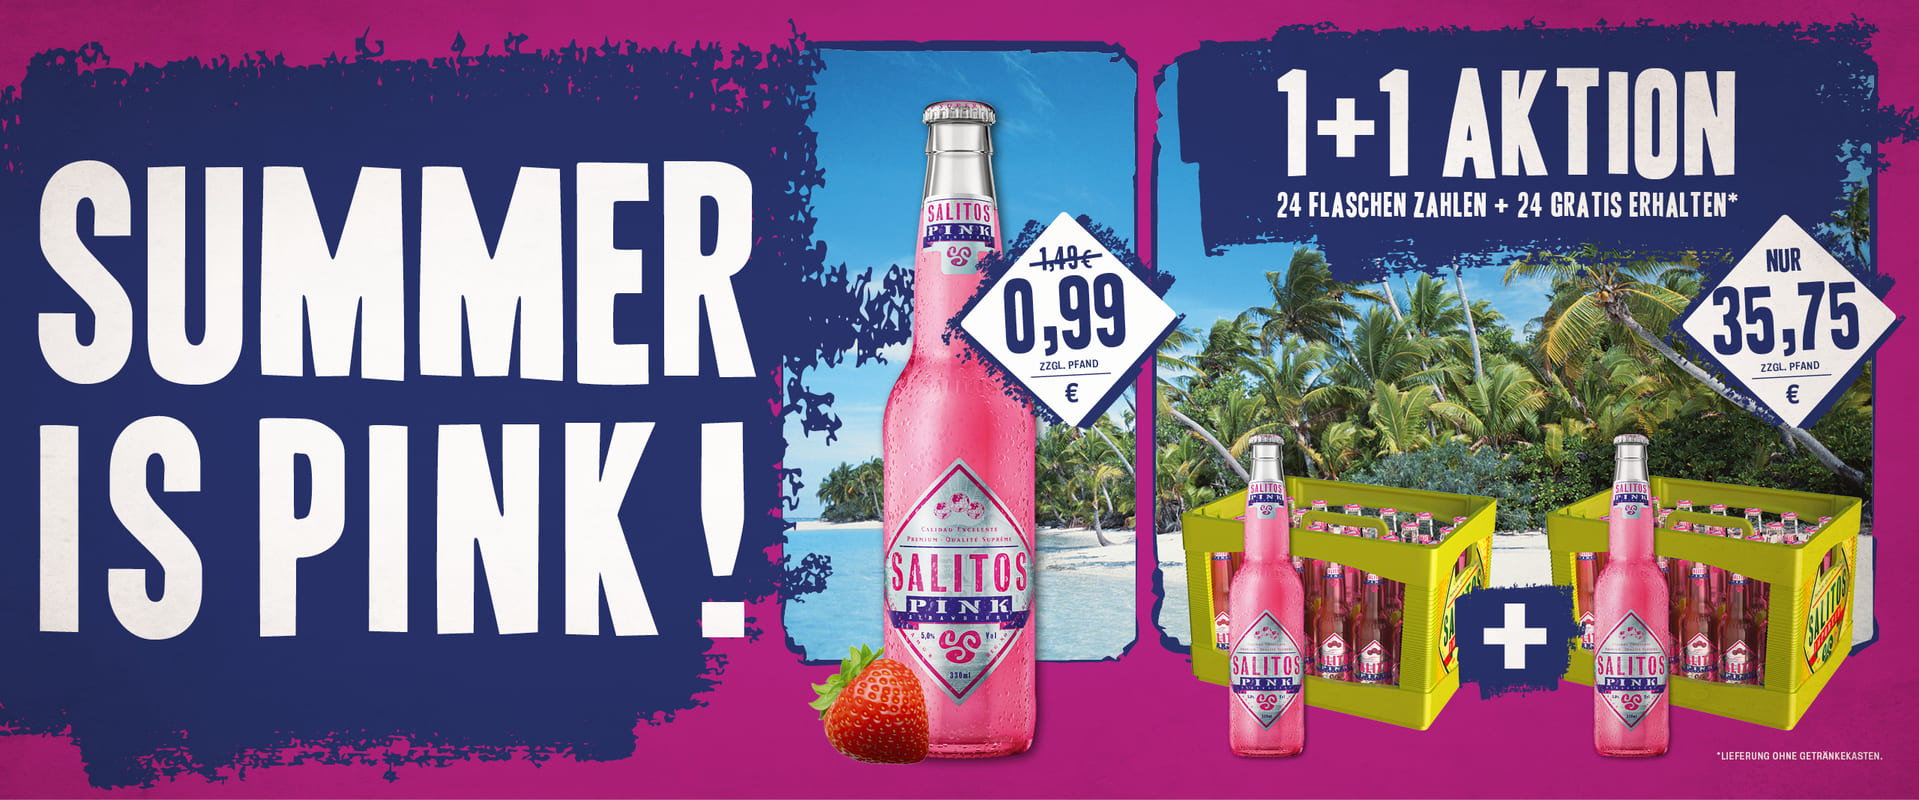 Salitos-Pink-Flasche-Sommer-Angebot-rechteck